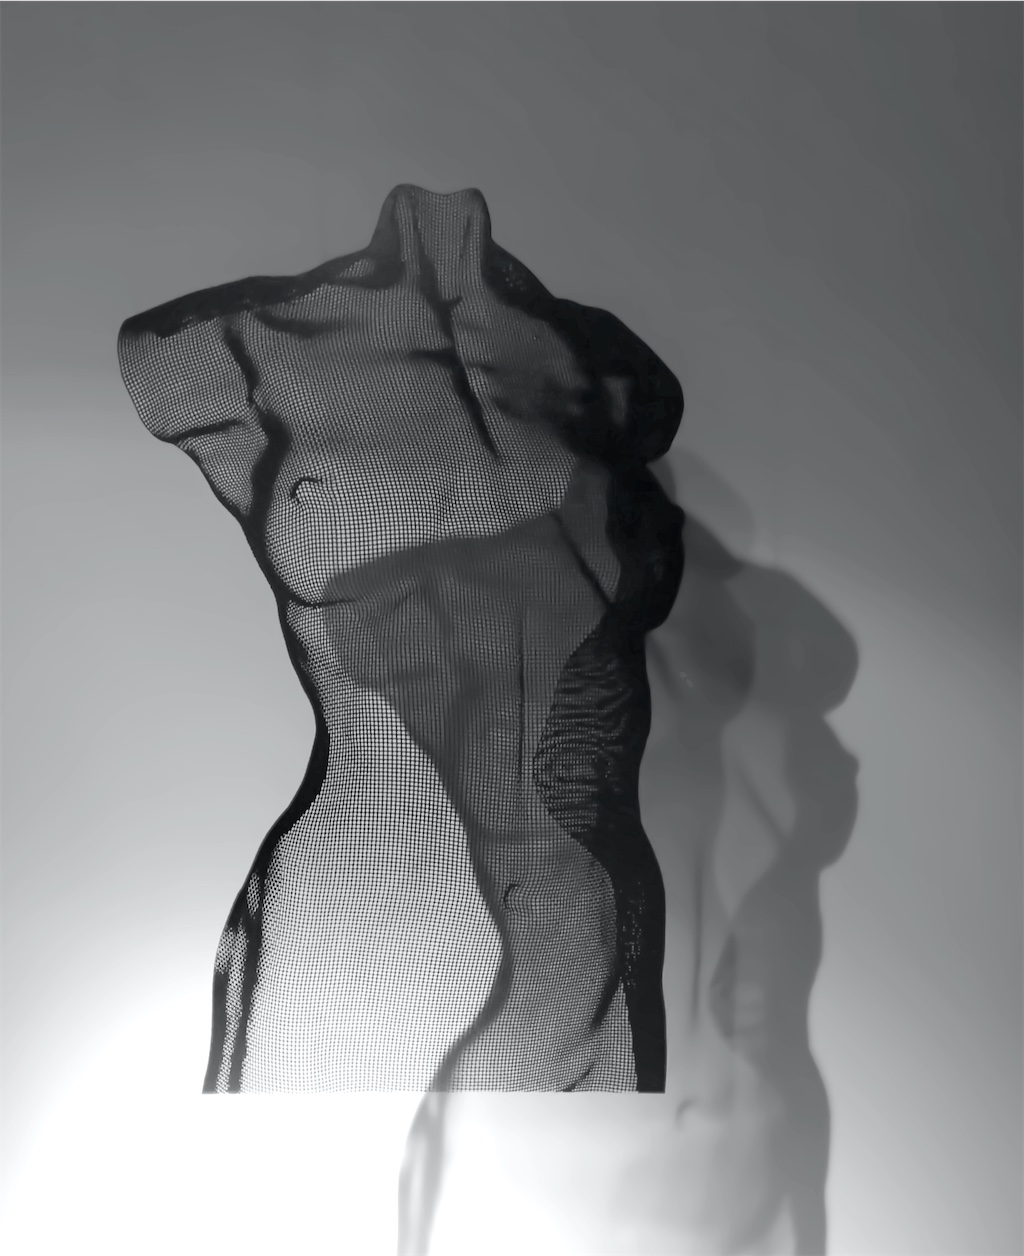 2 david begbie sculpture nuud shadow q